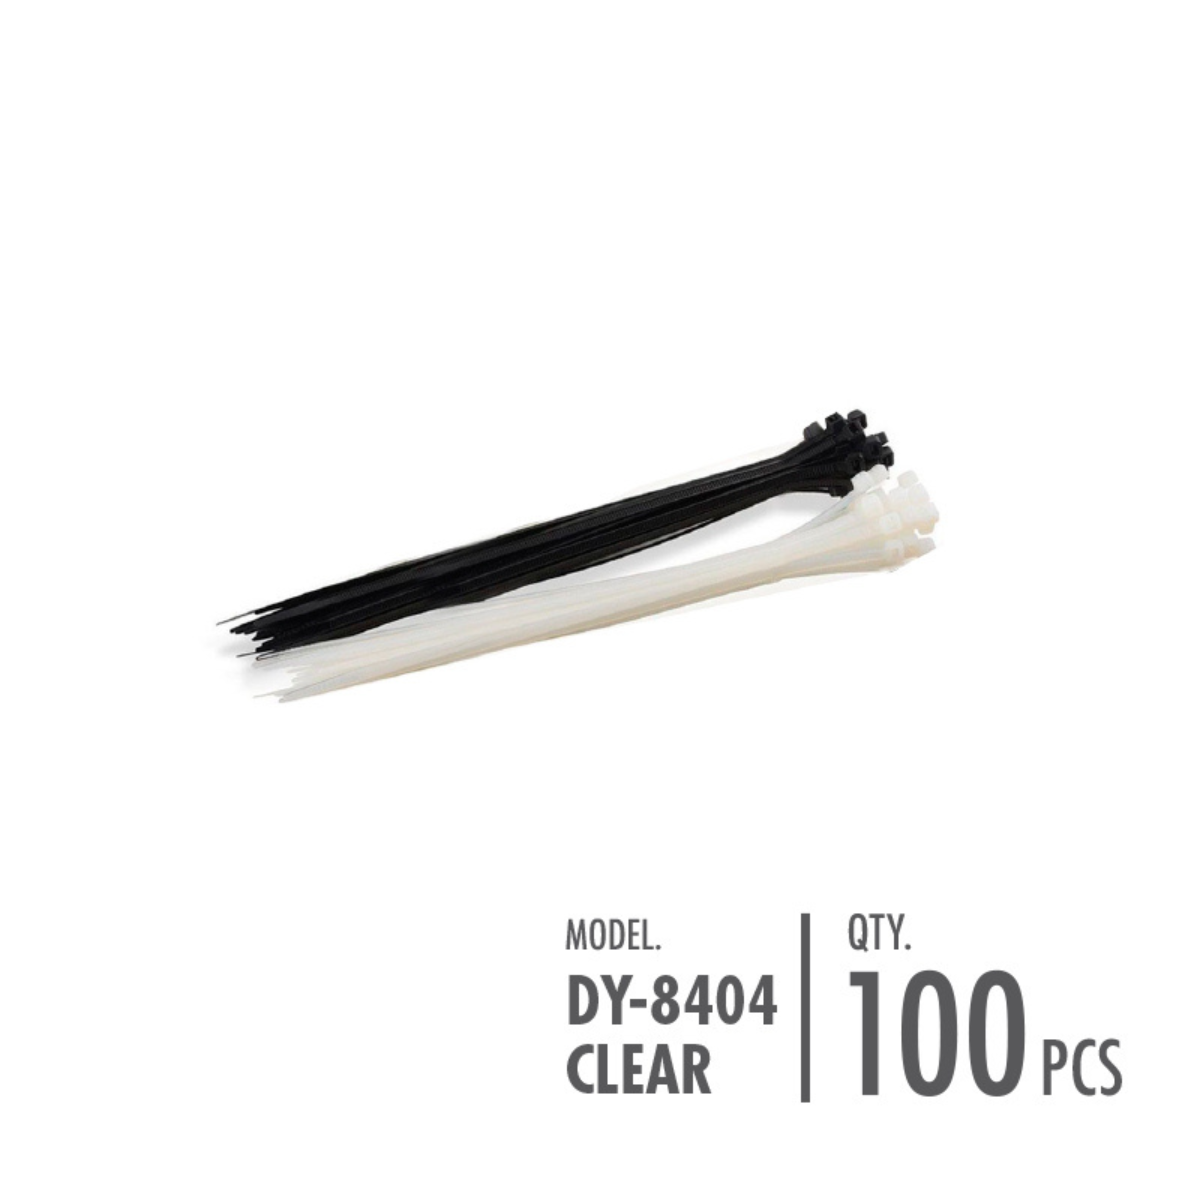 Cable Tie - Clear (Dim: 0.36 x 25cm)